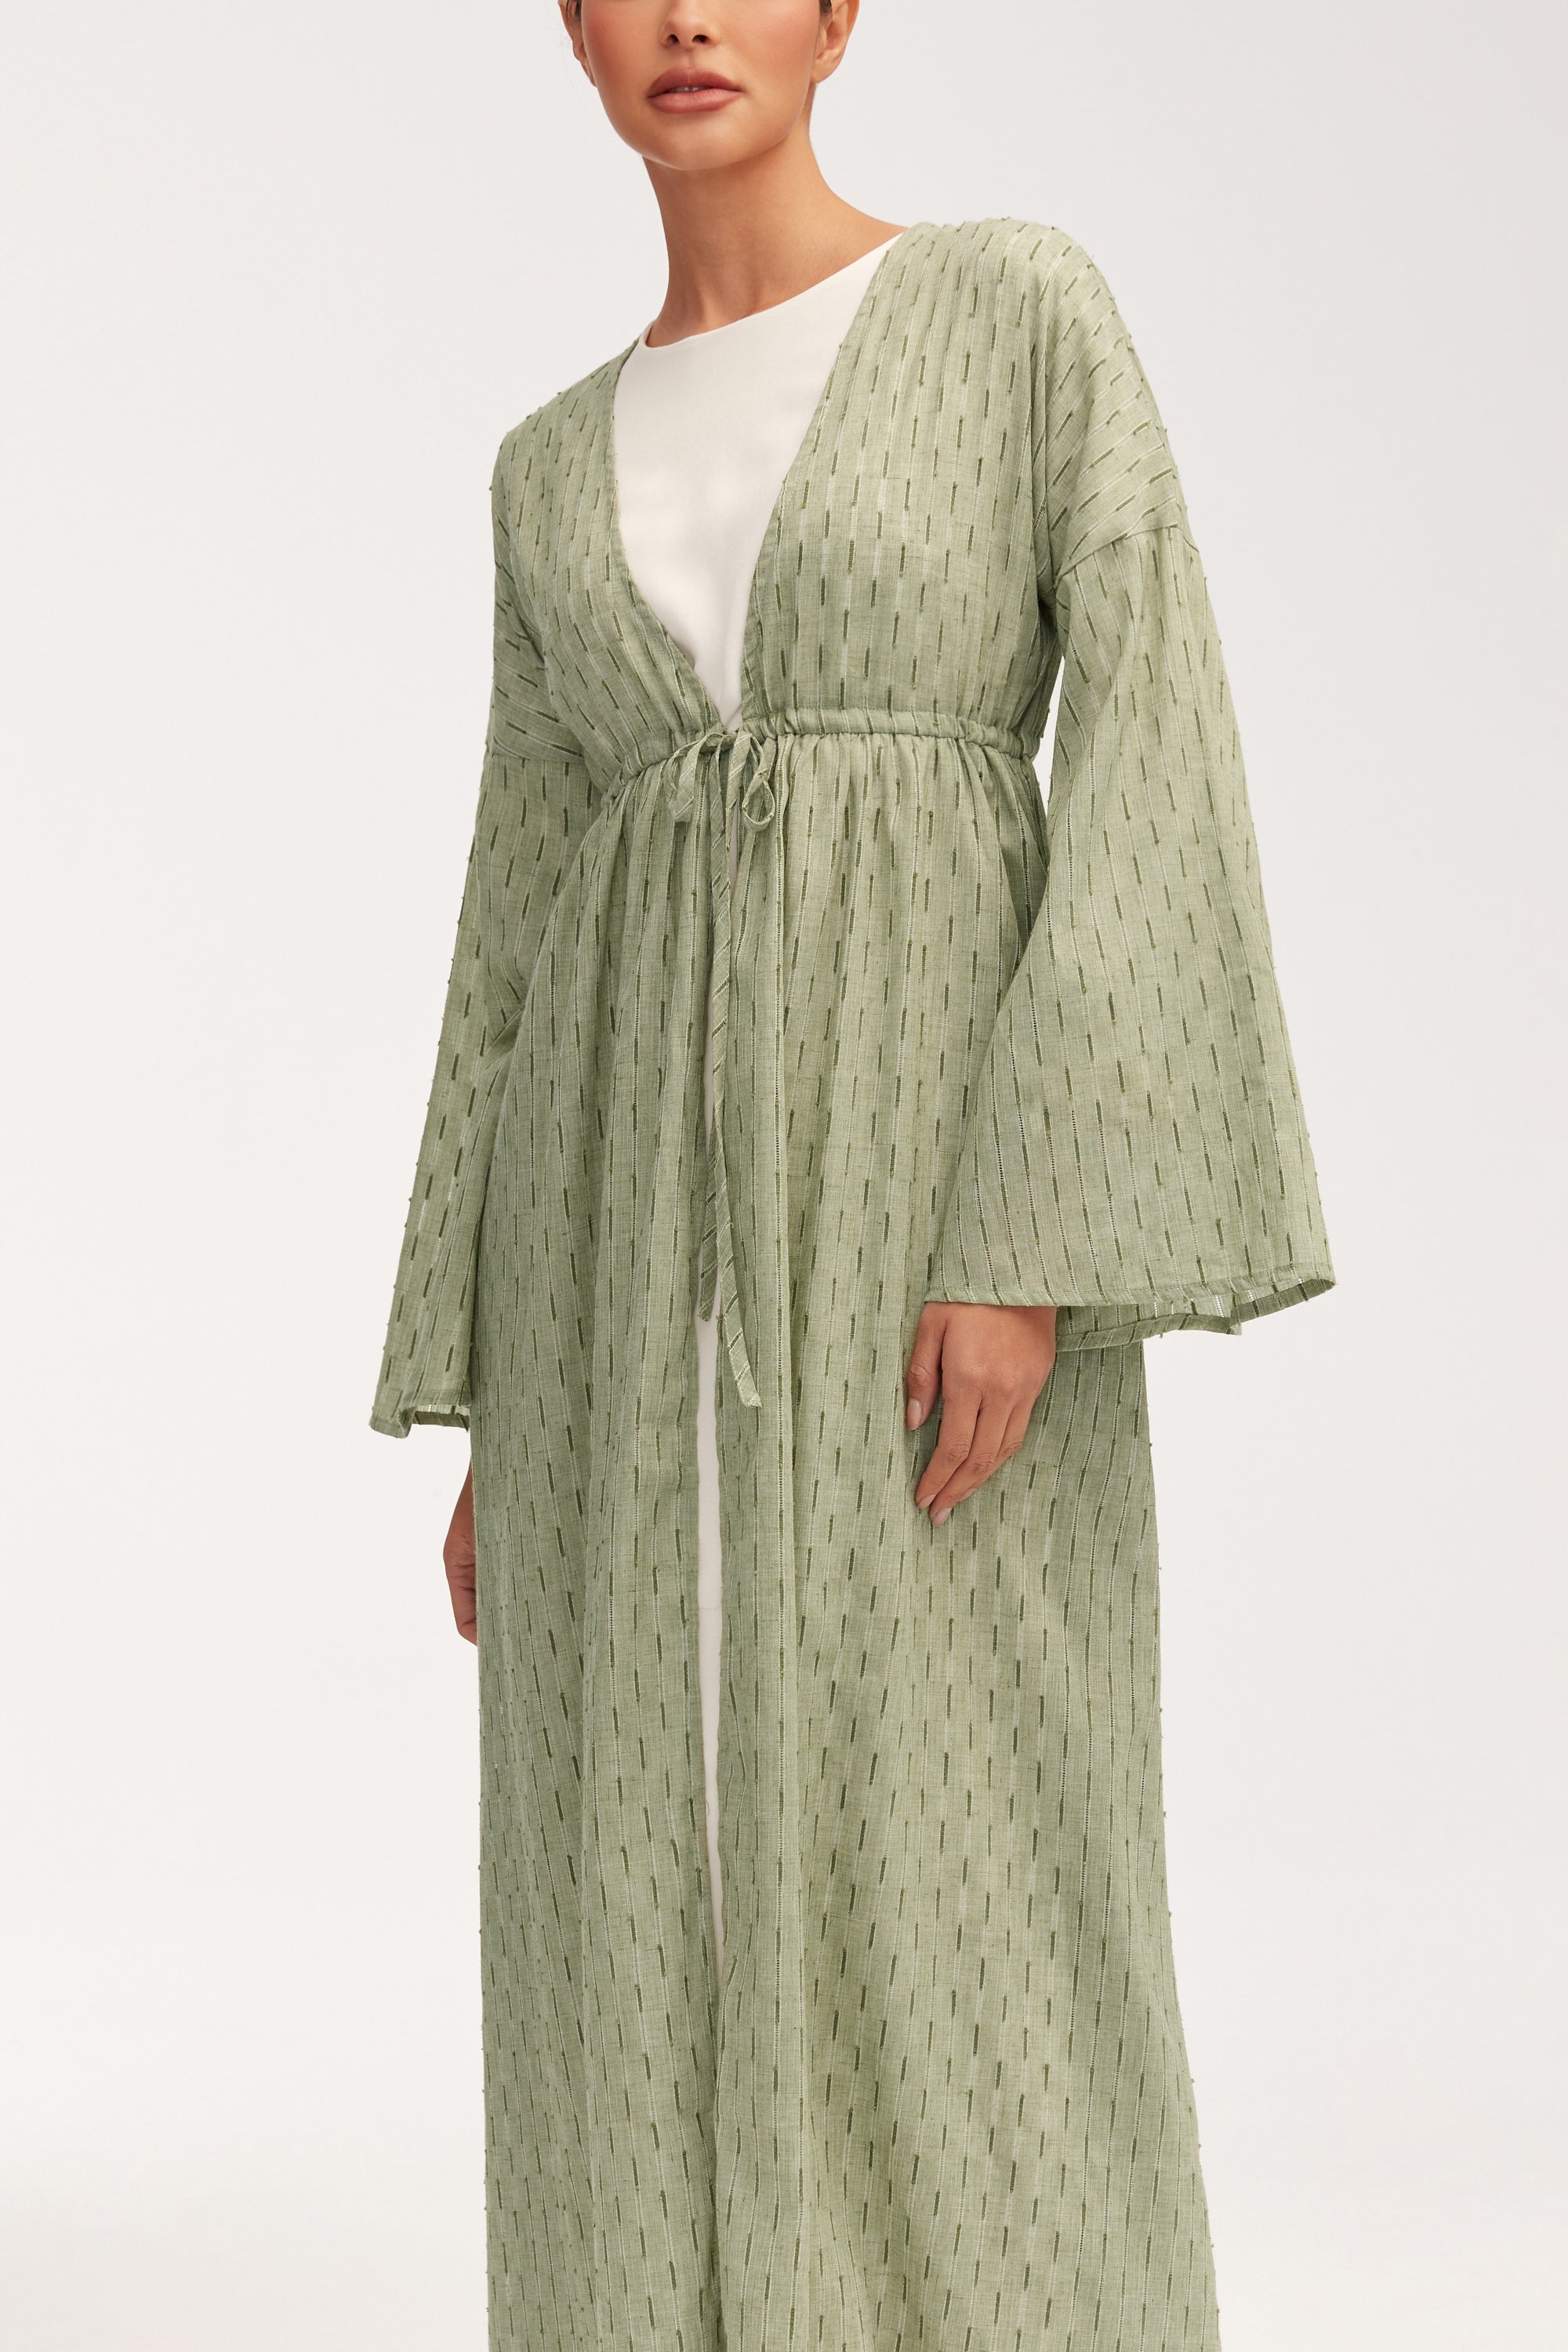 Mara Cotton Tie Front Abaya Clothing Veiled 